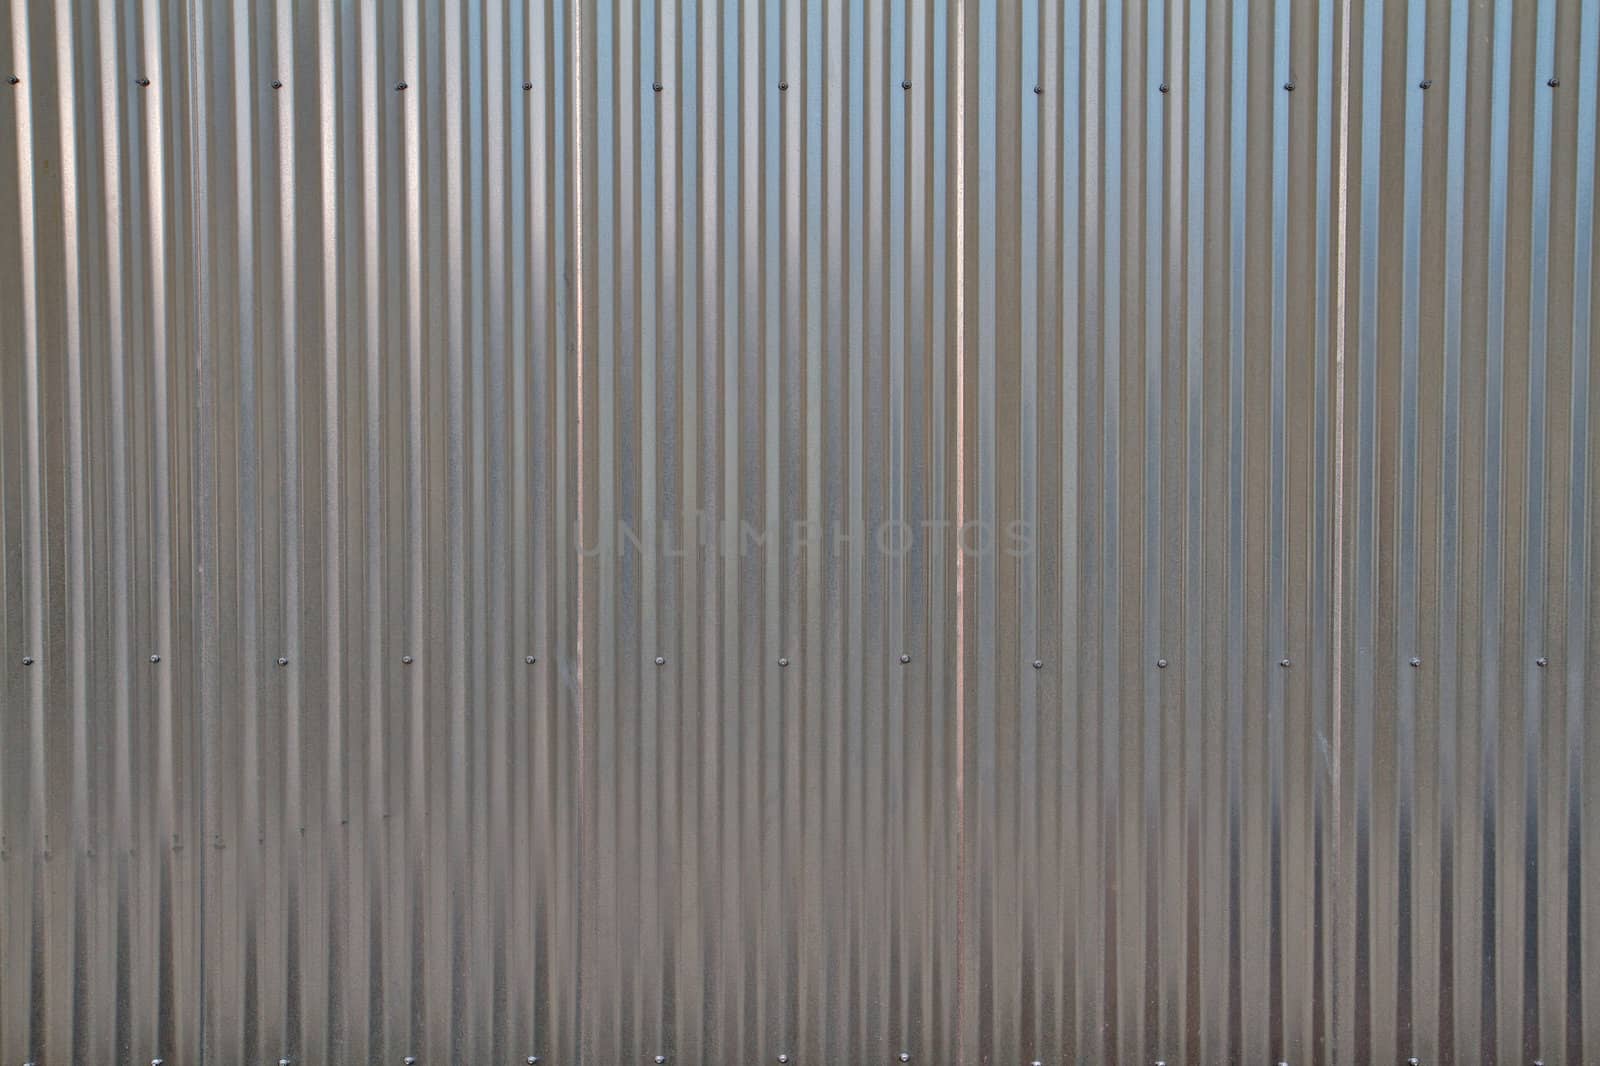 Corregated Wall by bobkeenan